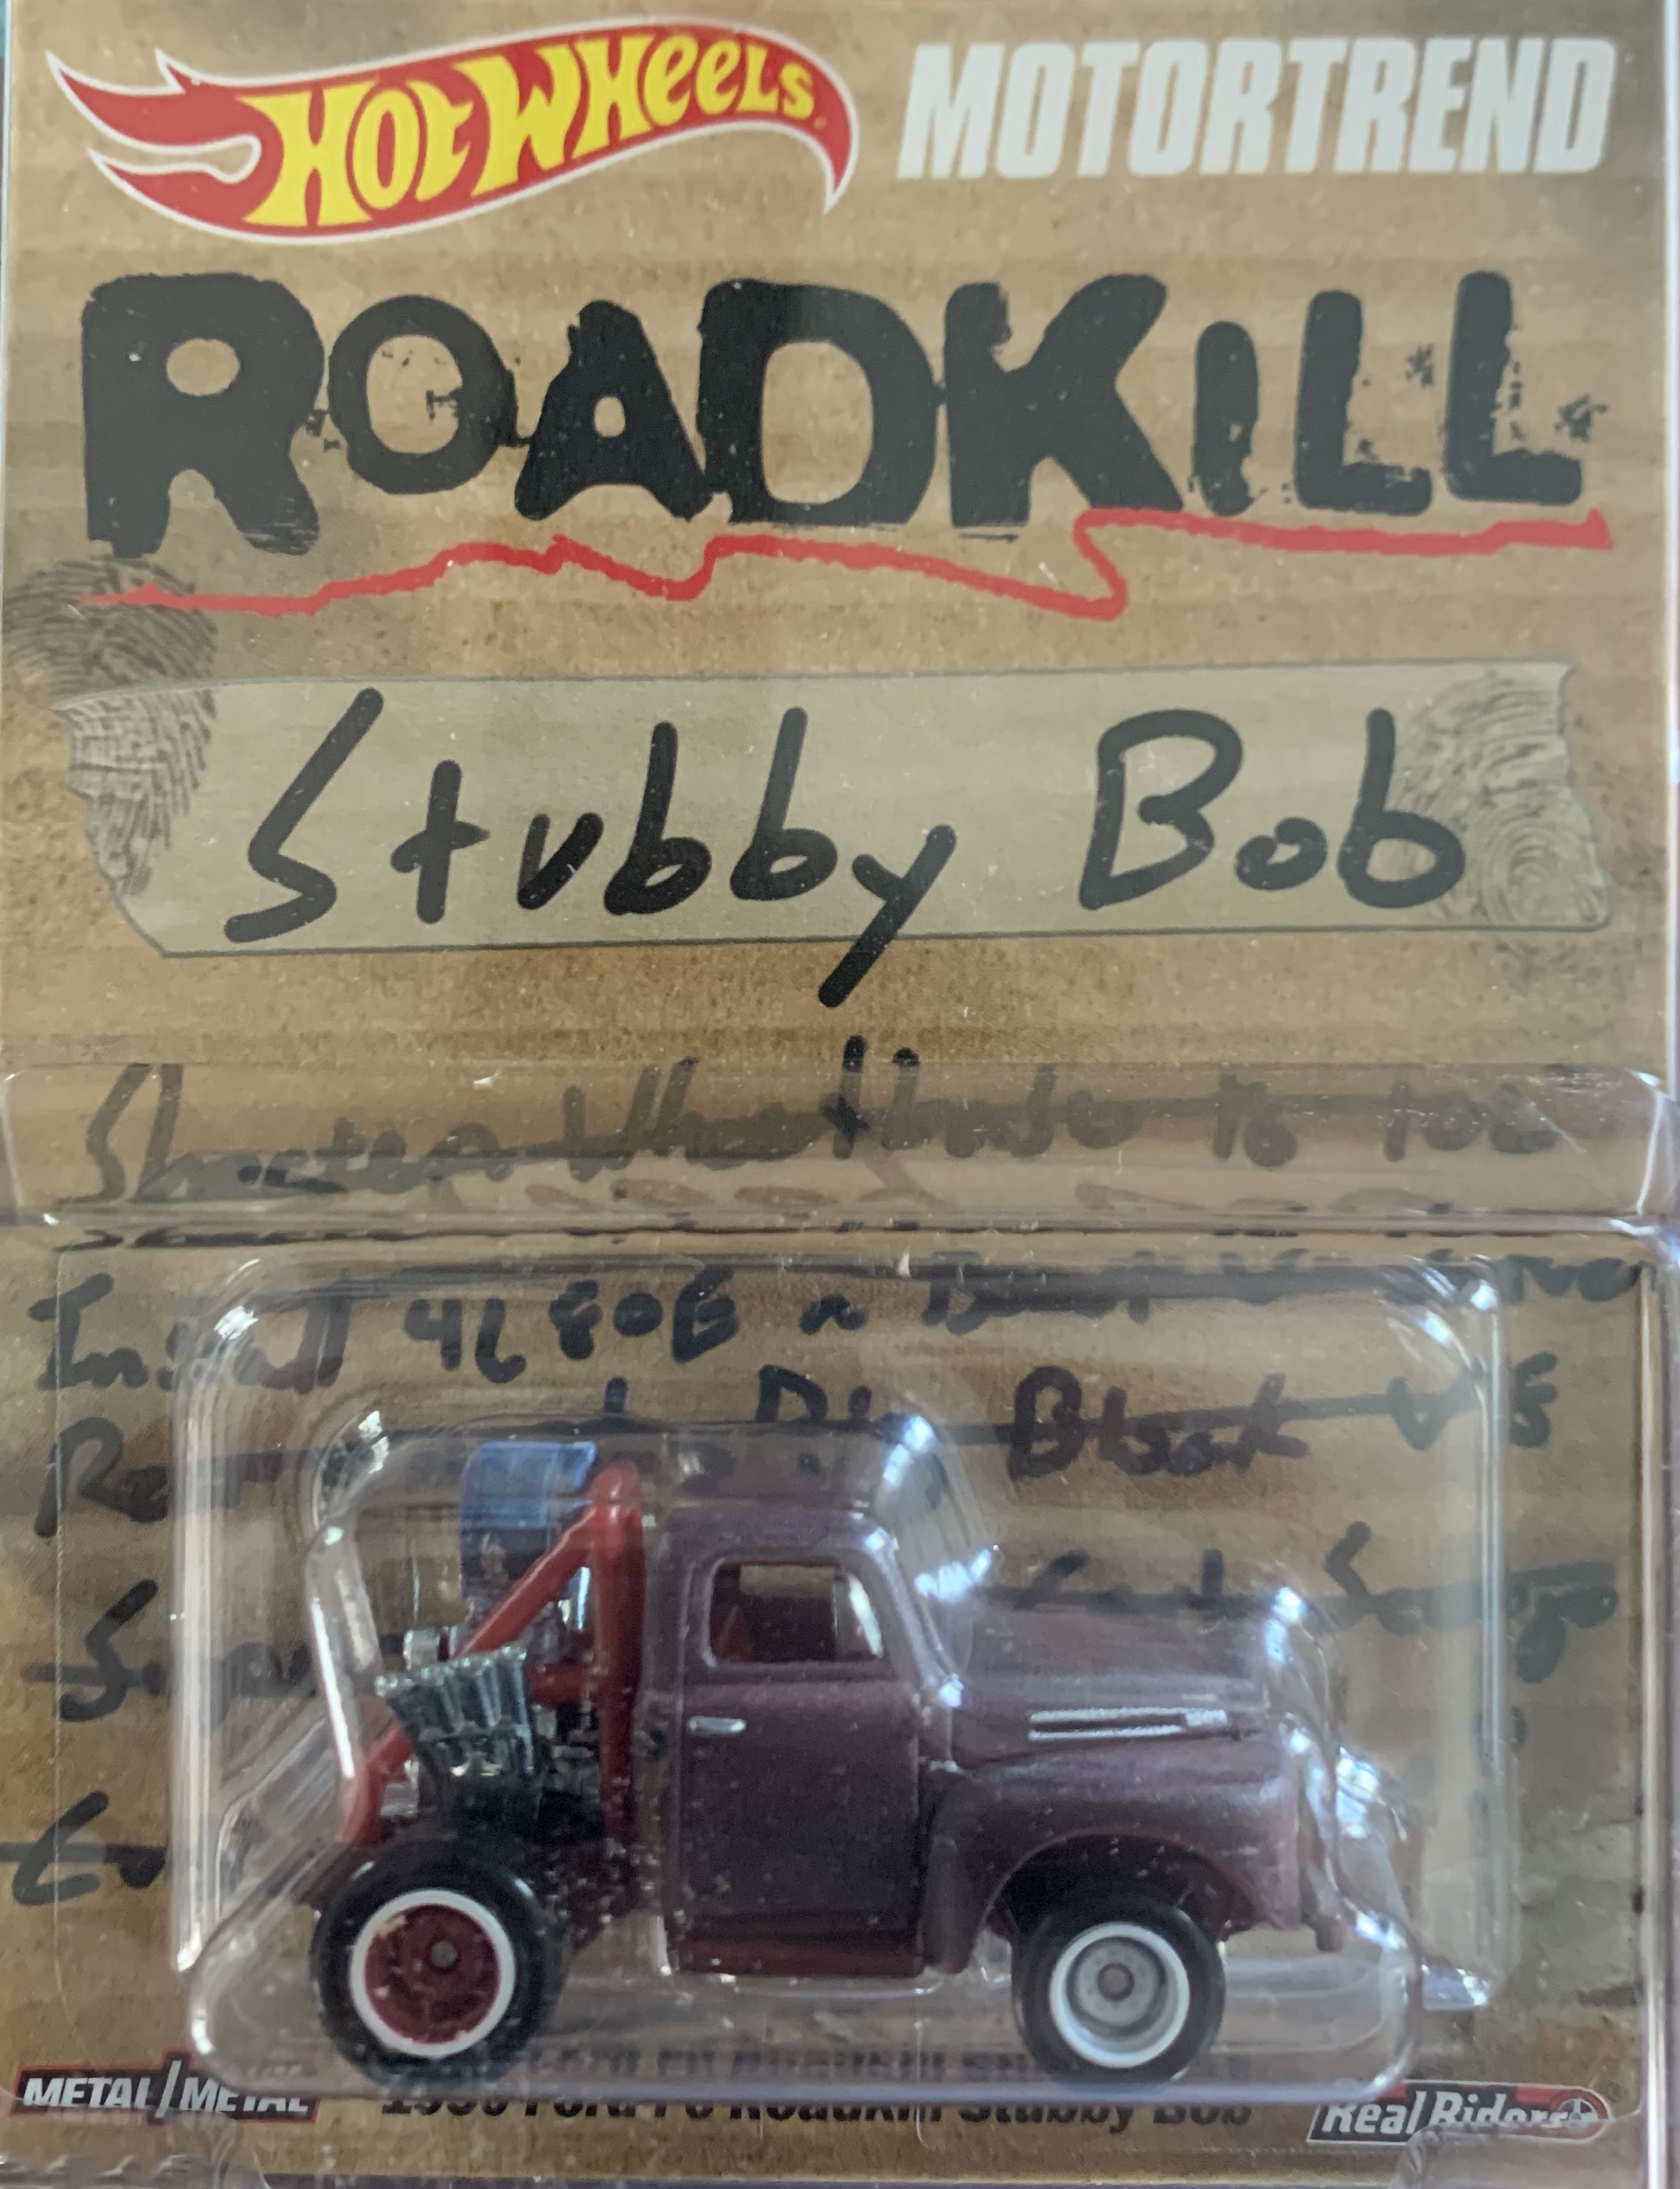 1950 Ford F6 Roadkill Stubby Bob | Hot Wheels Wiki | Fandom